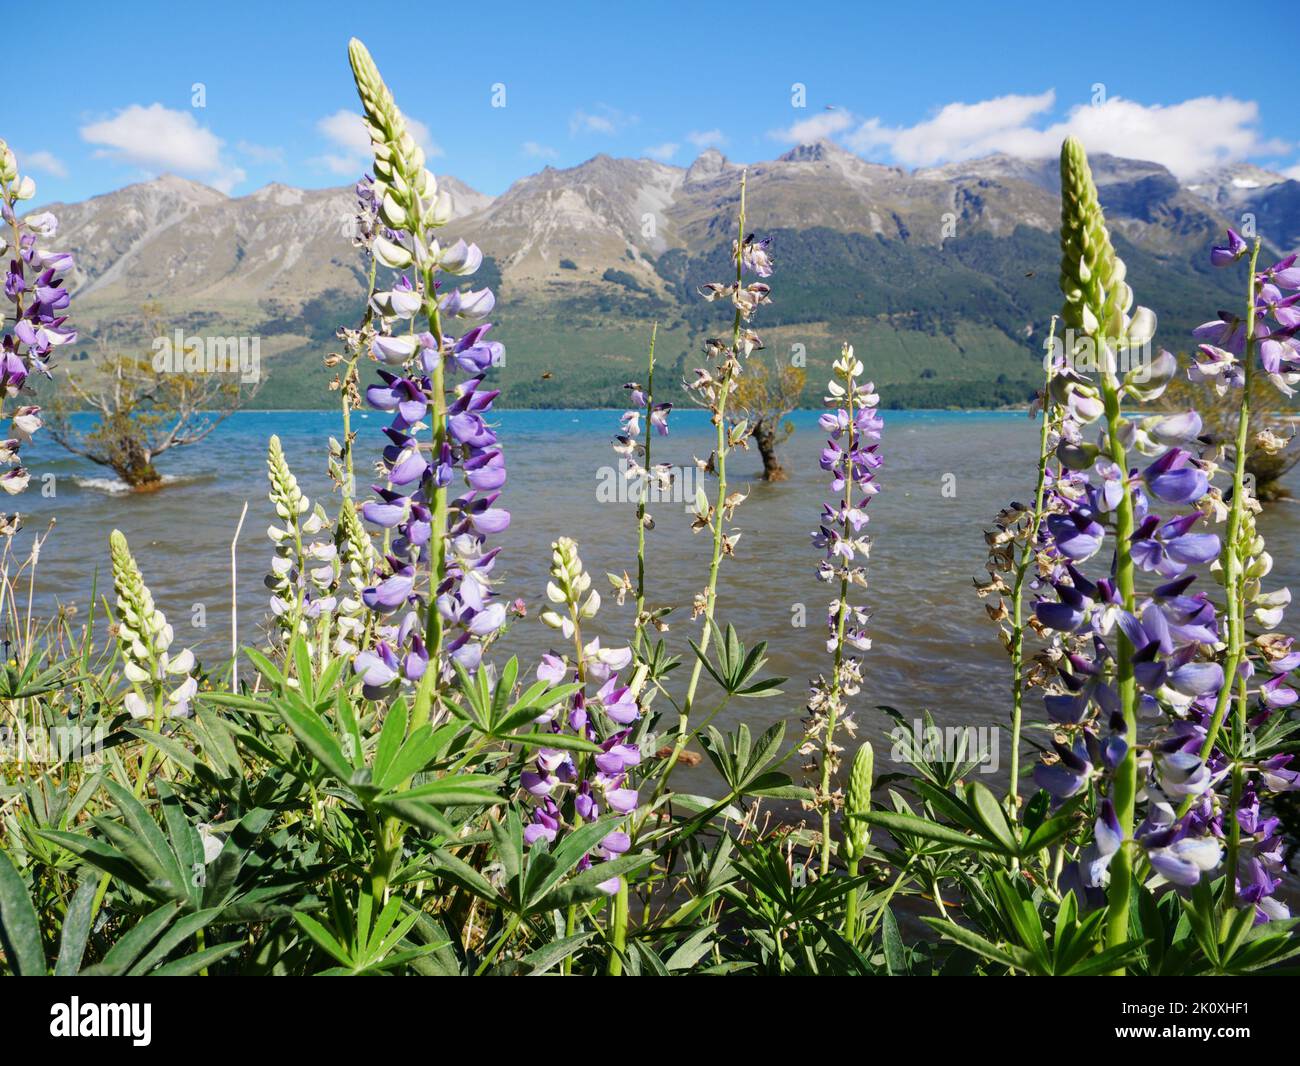 Lilane  violette Lupinen am See - Bergsee - Lake Wakatipu - Glenorchy - Neuseeland - New Zealand - violet lupines Stock Photo